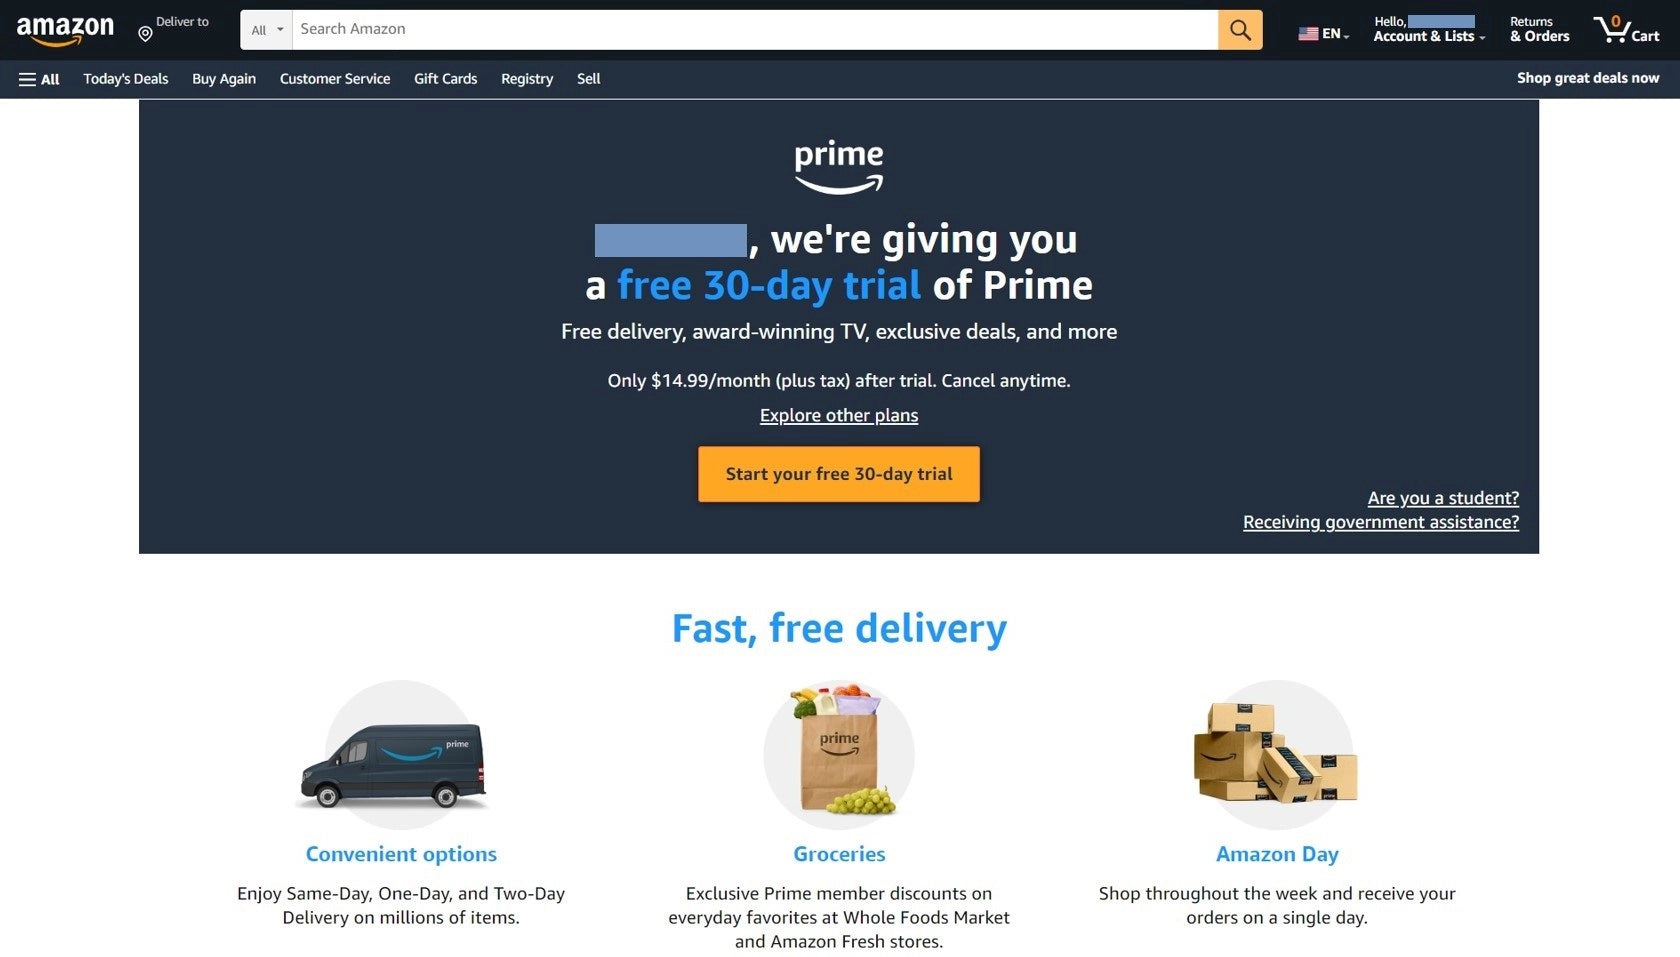 Amazon Prime webpage explaining the free delivery benefit